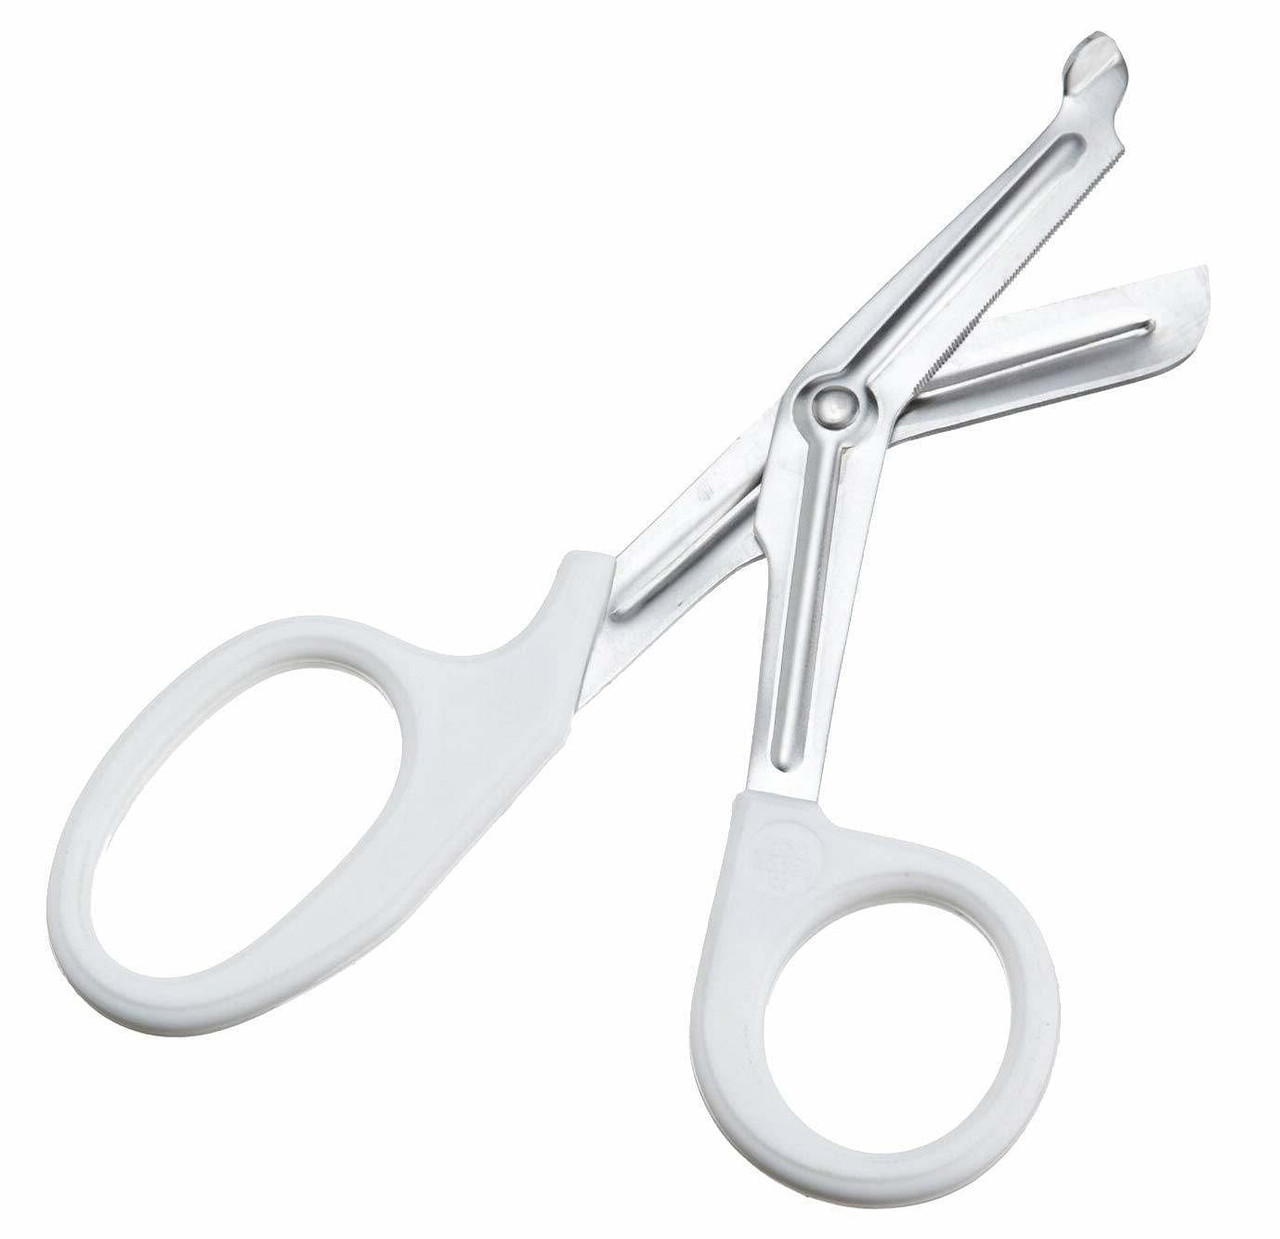 White Trauma Shears 7 1/4", Medical Scissors for Nurses 7.25', Heavy Duty Surgical Scissors, Stainl